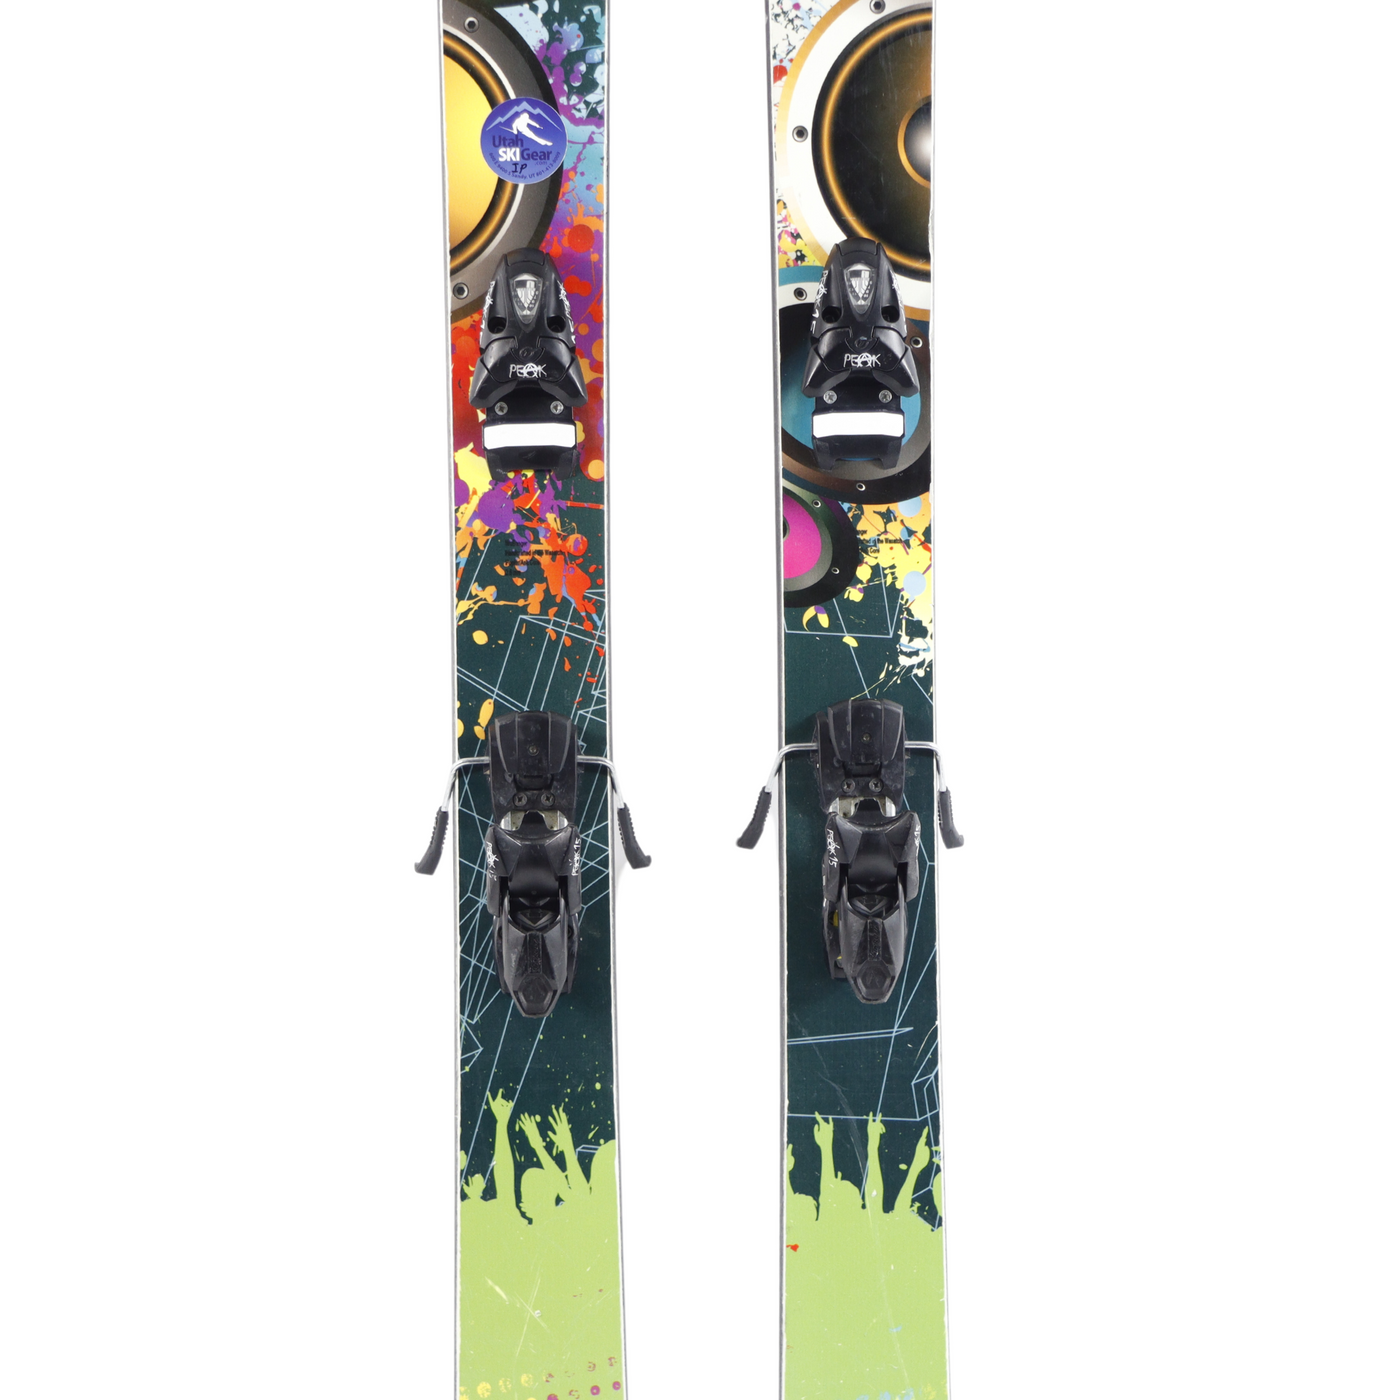 Wubanger Original Skis 186cm + Tyrolia Peak 15 Bindings - USED Skis Wubanger   